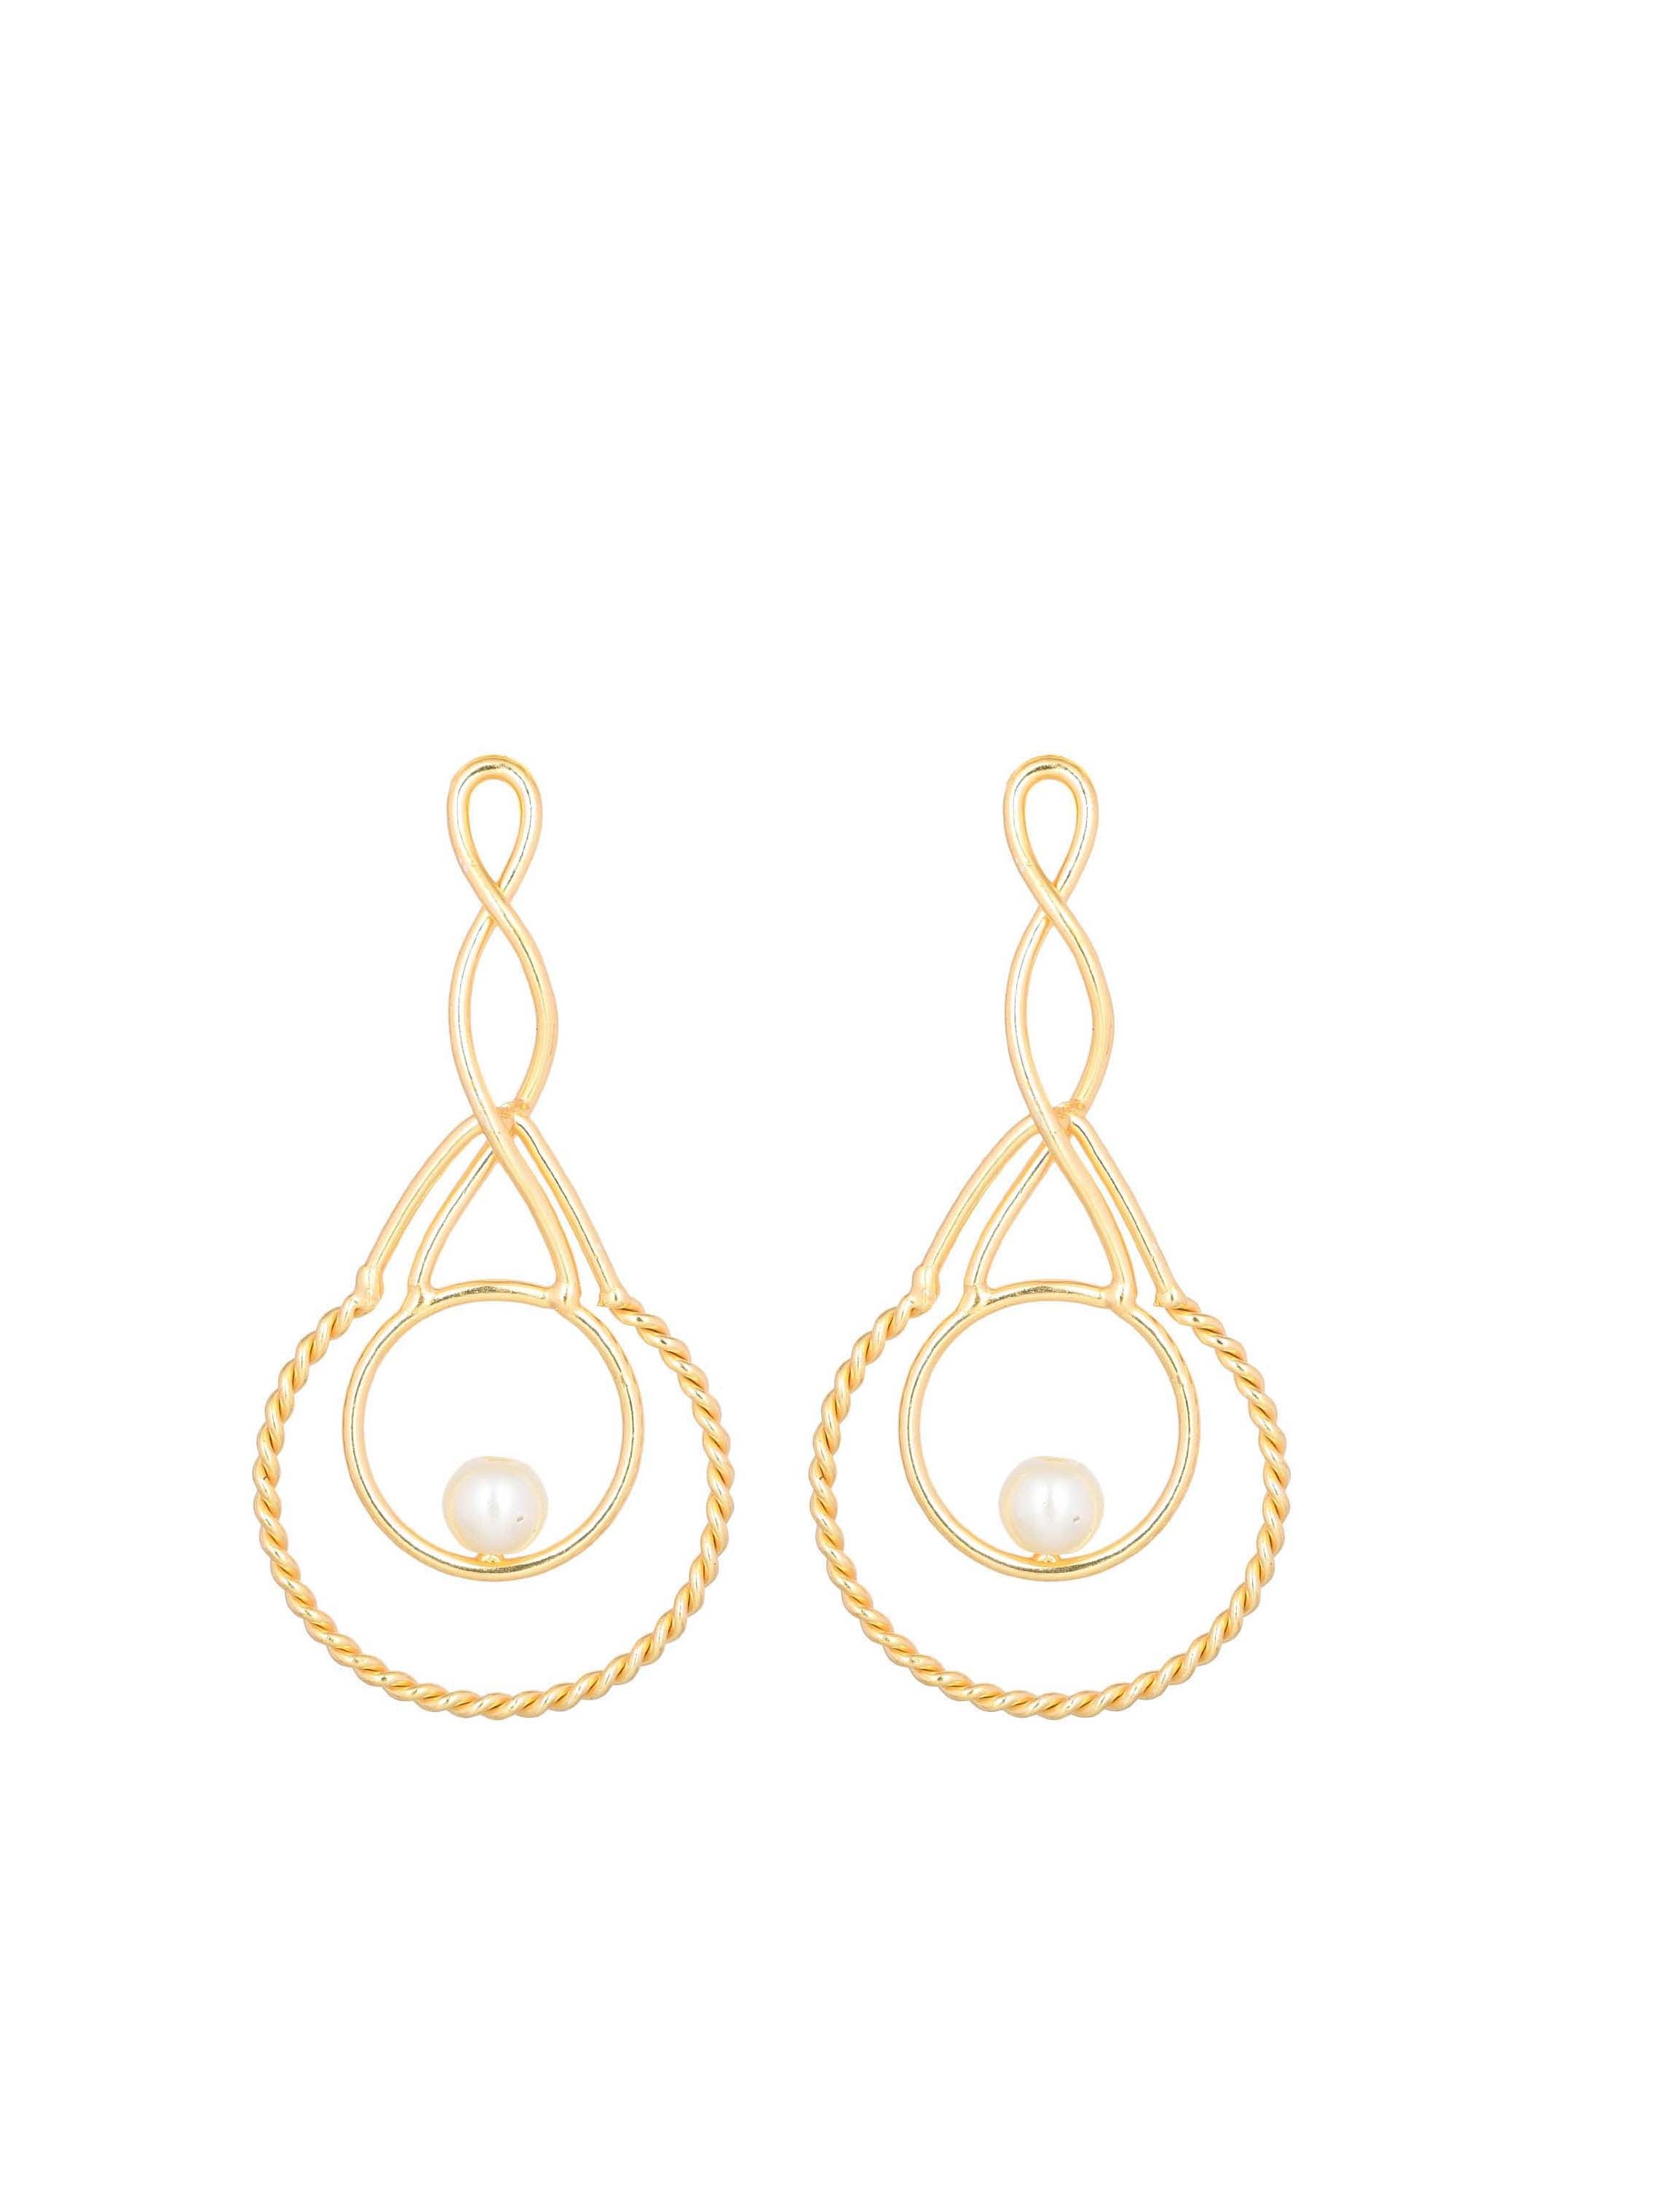 Women's Layered Twisted Golden Earrings - Zurii Jewels